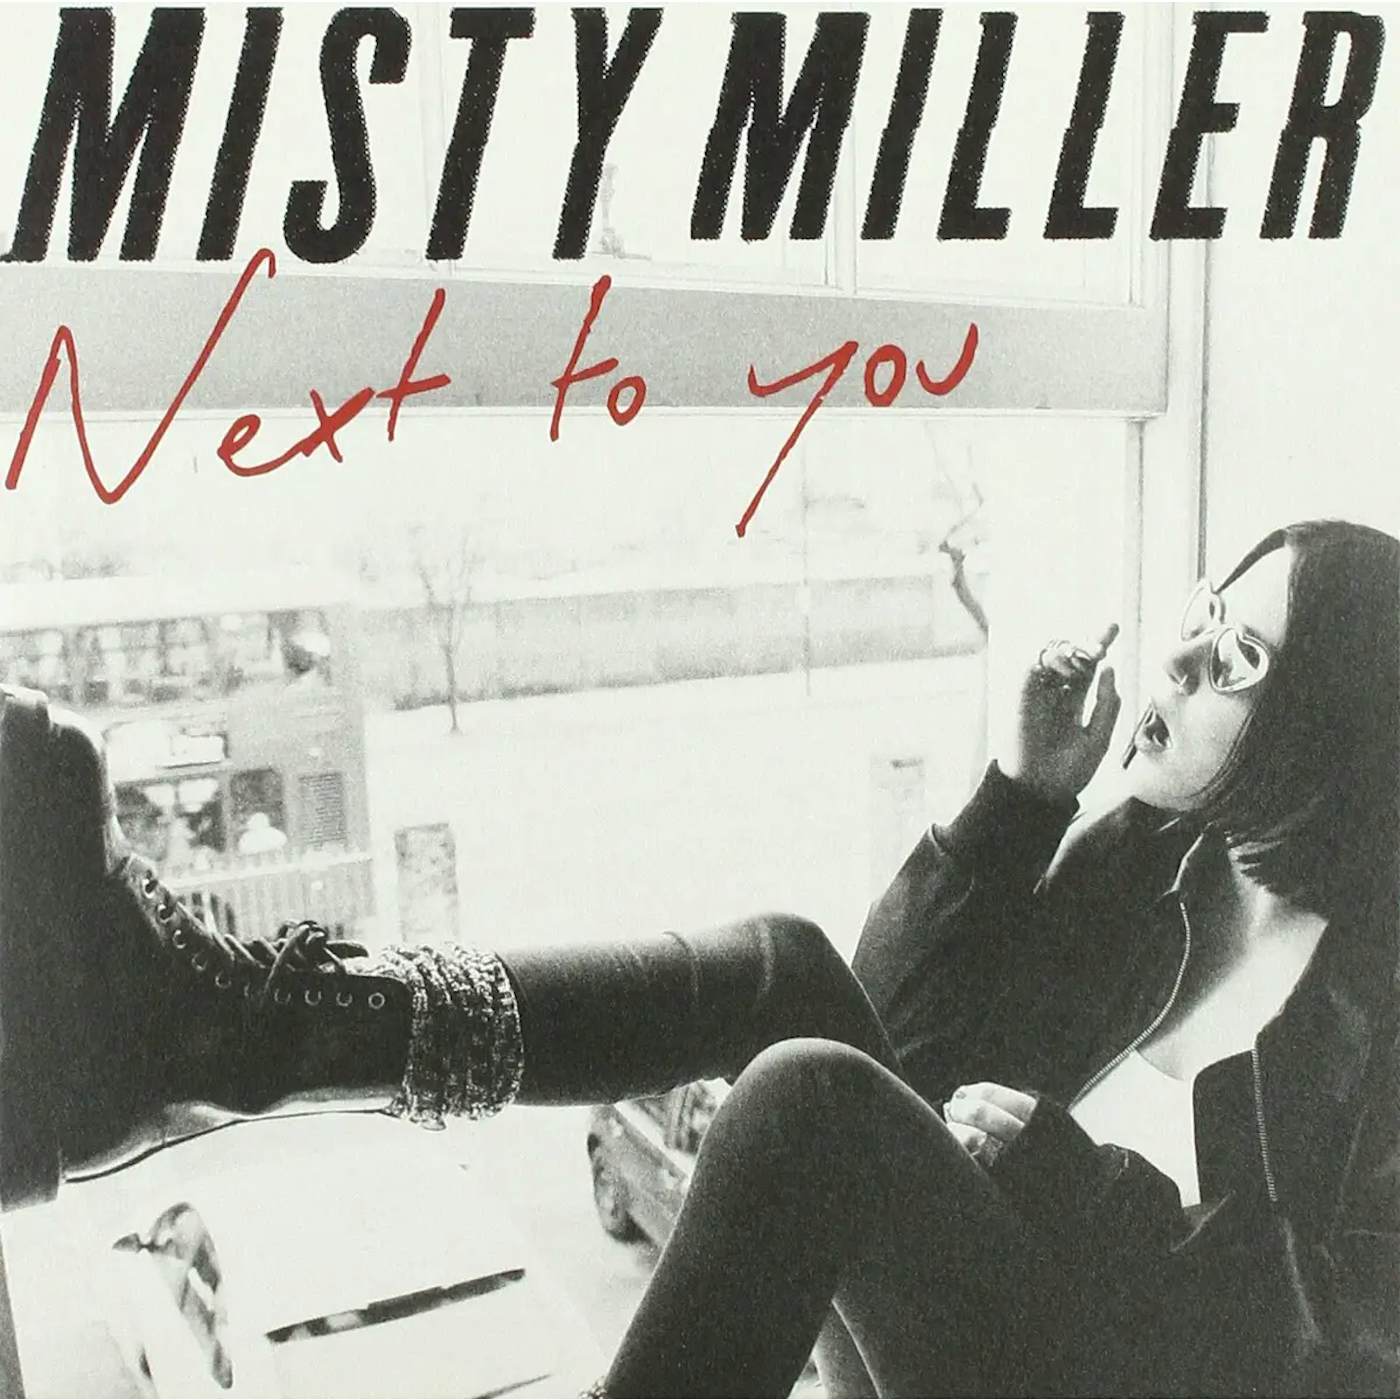 Misty Miller NEXT TO YOU Vinyl Record